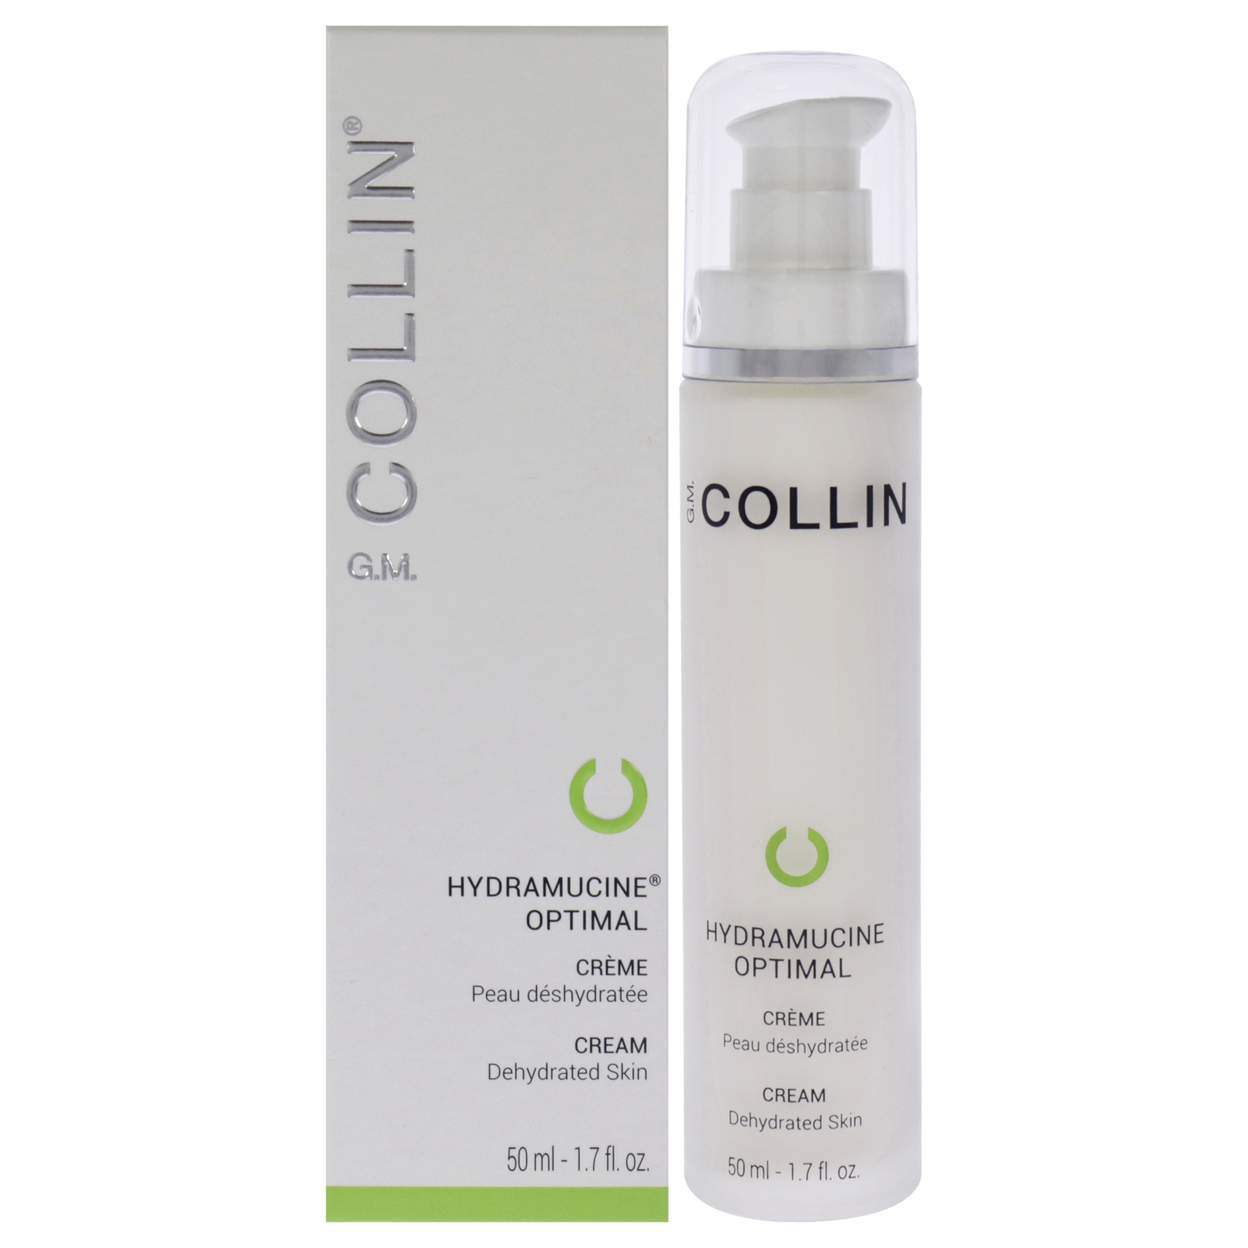 G.M. Collin Hydramucine Optimal Cream 1.7 Oz